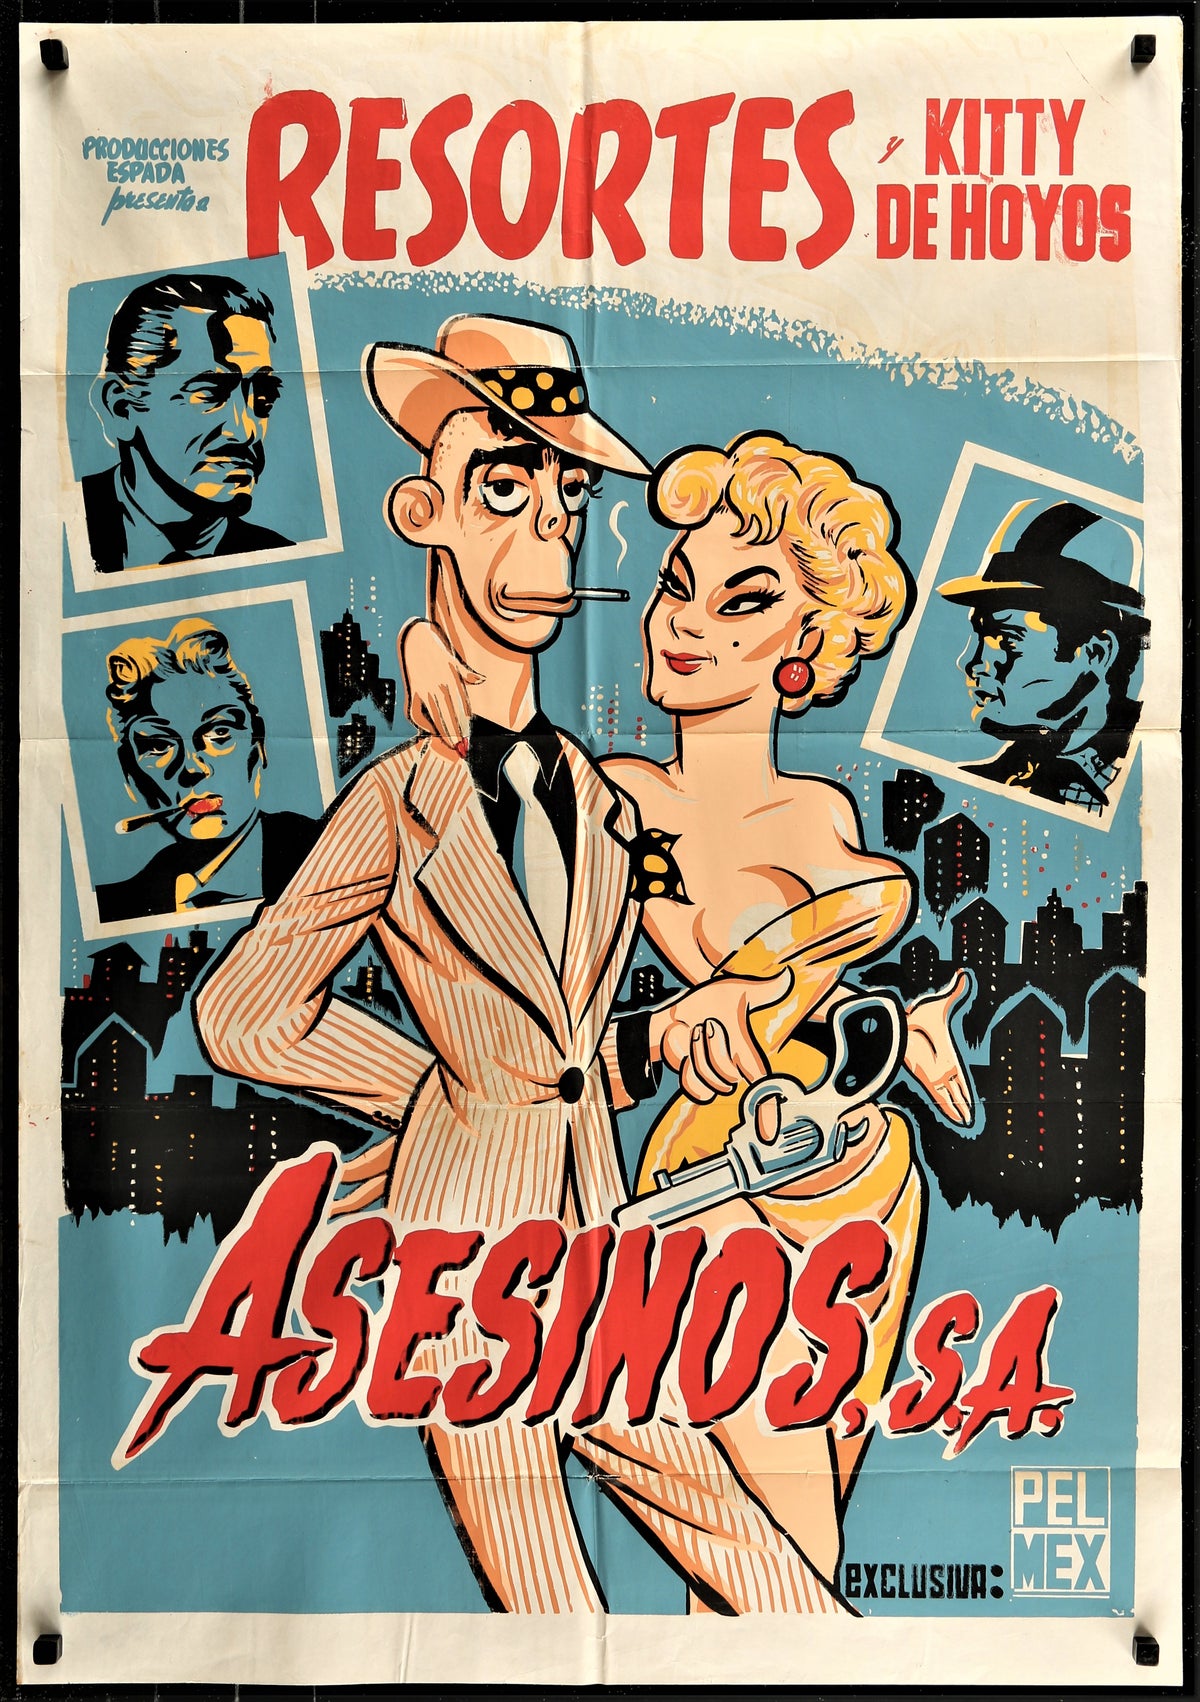 Asesino- Assassain - Authentic Vintage Poster